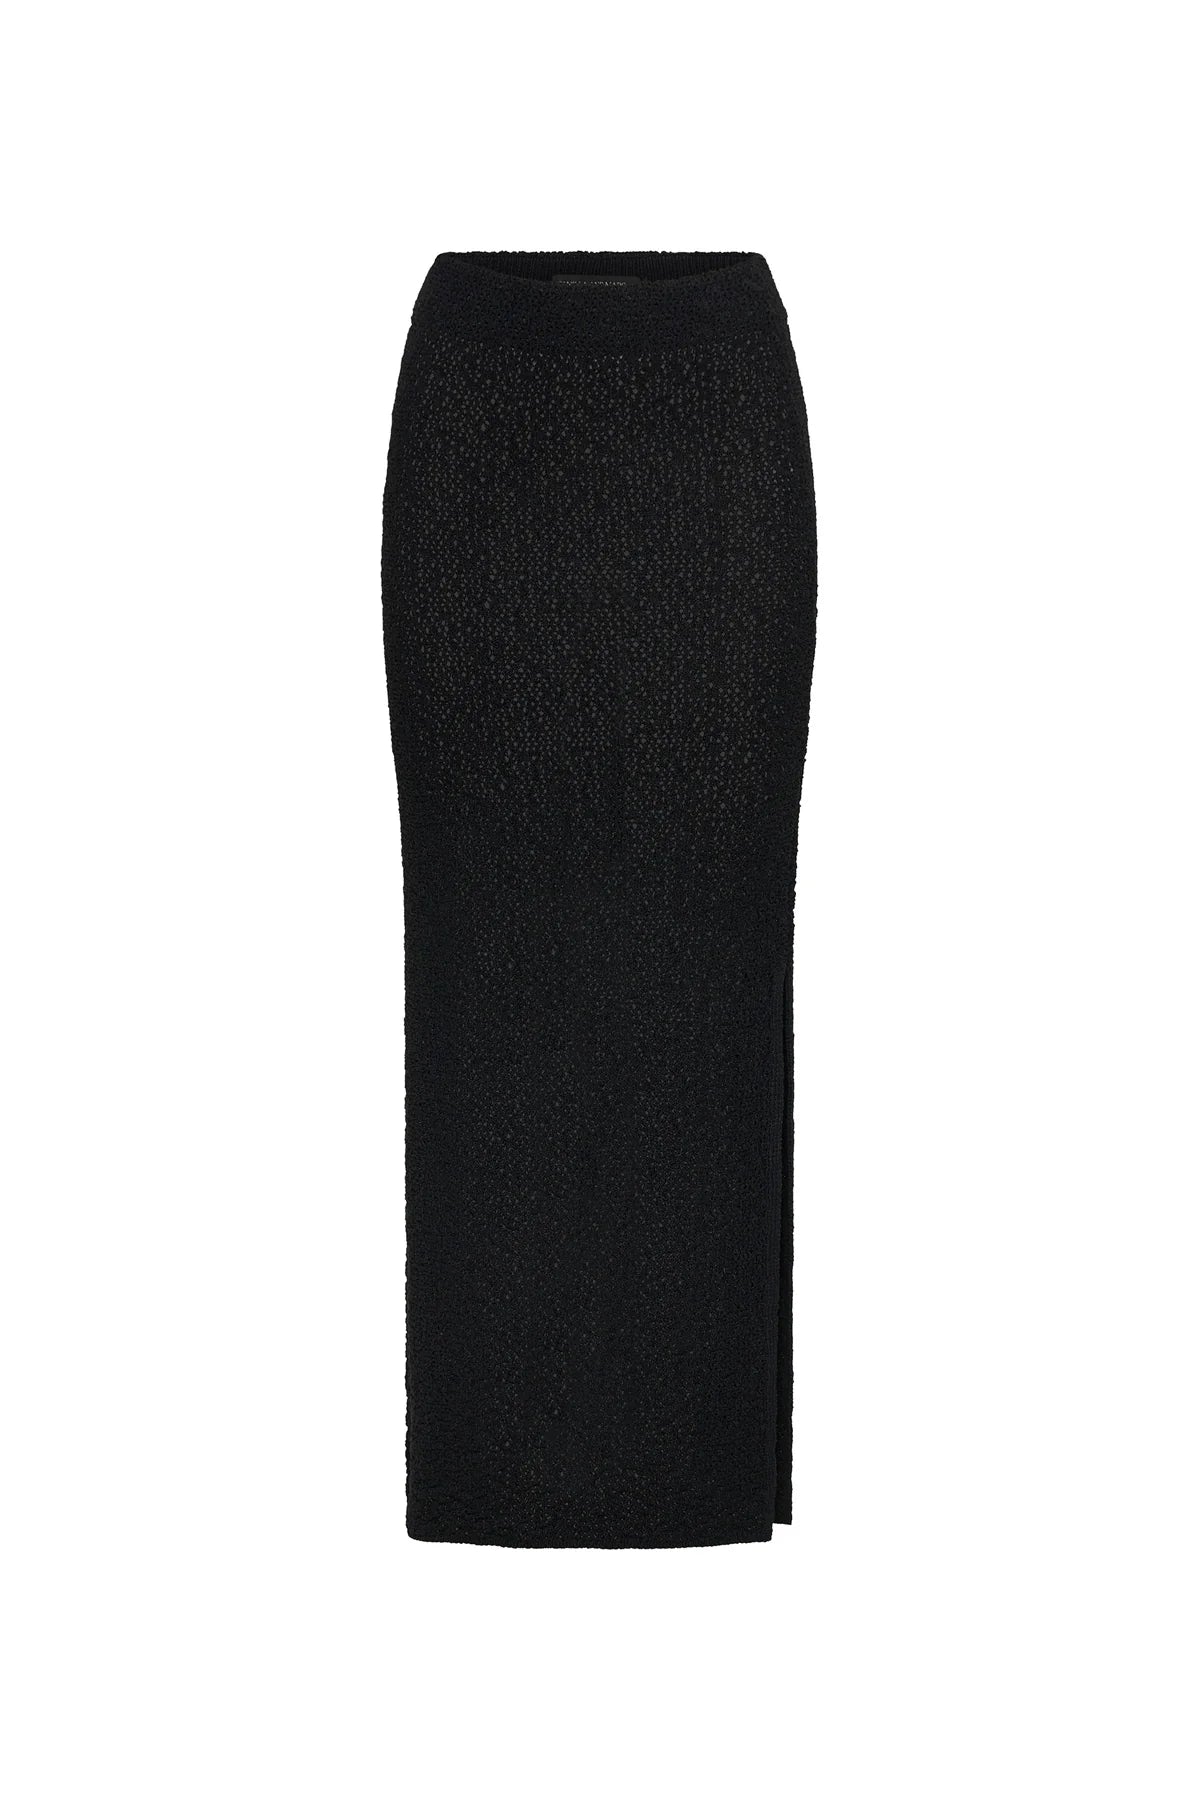 C&M Skirts - Casual C&M | Chara Knit Skirt - Black